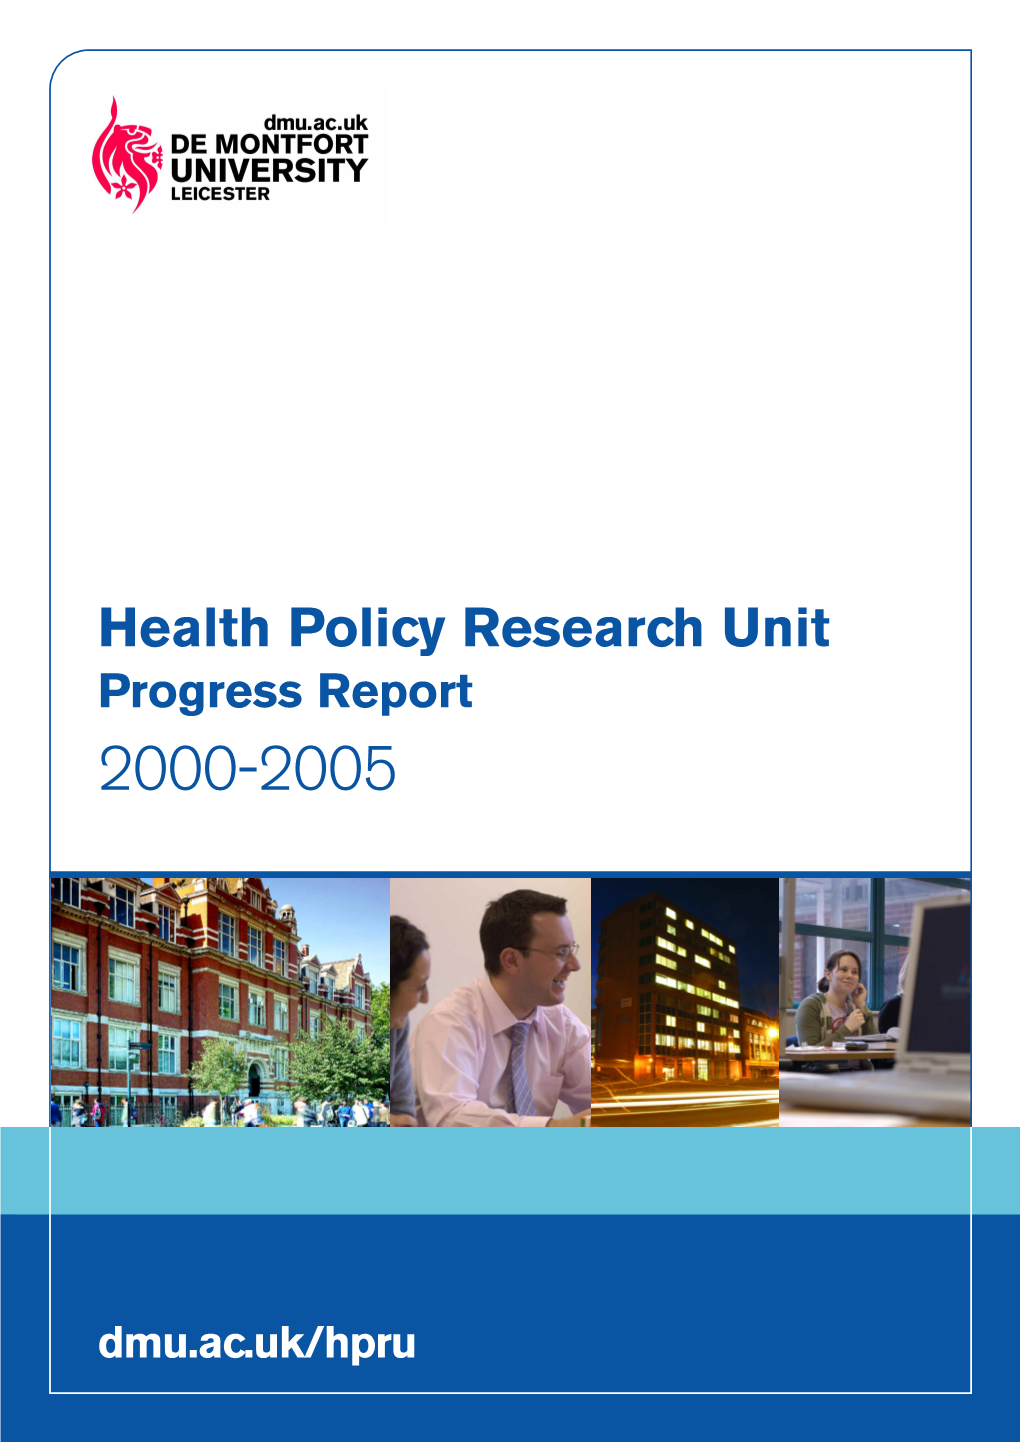 Health Policy Research Unit Progress Report 2000-2005